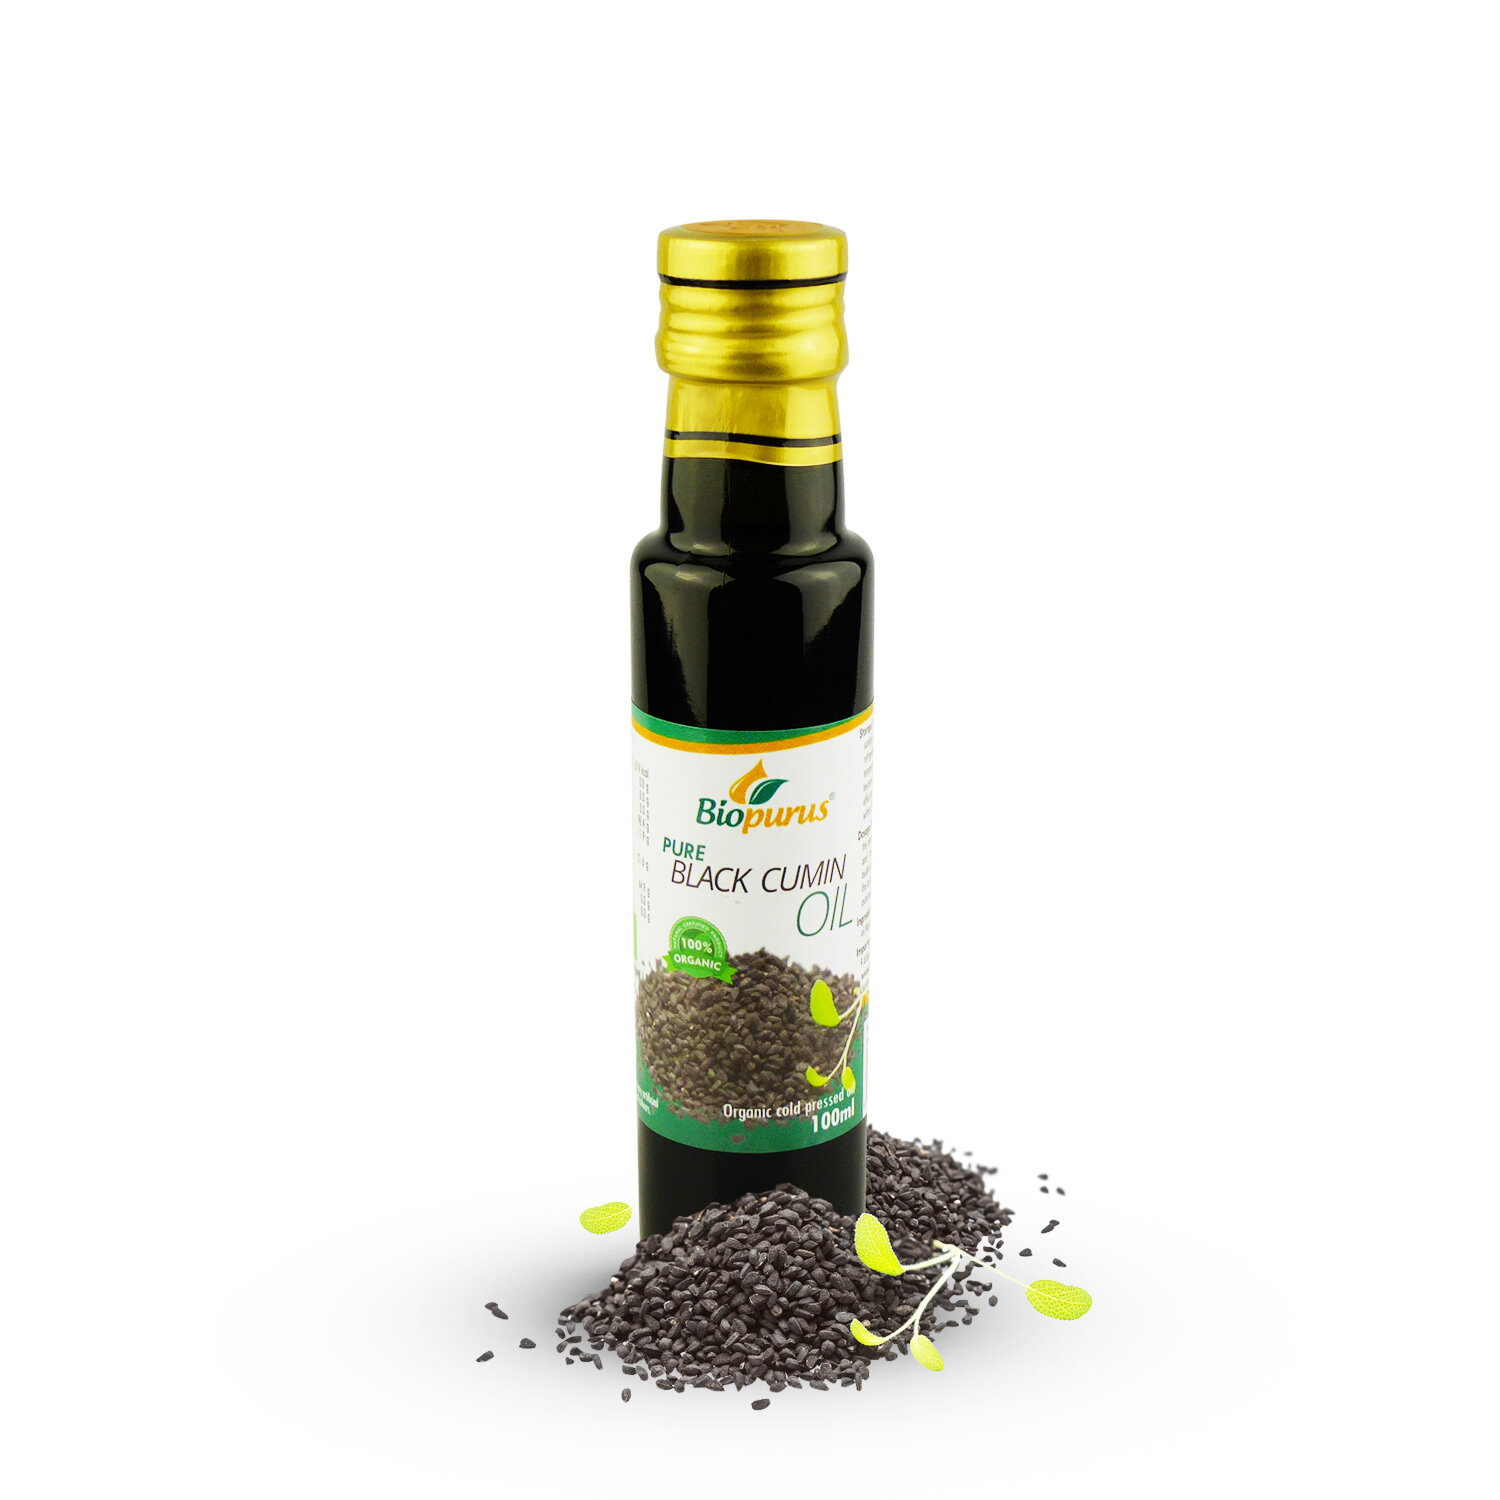 Certified Organic Cold Pressed Black Cumin / Black Seed Oil 100ml Biopurus AT